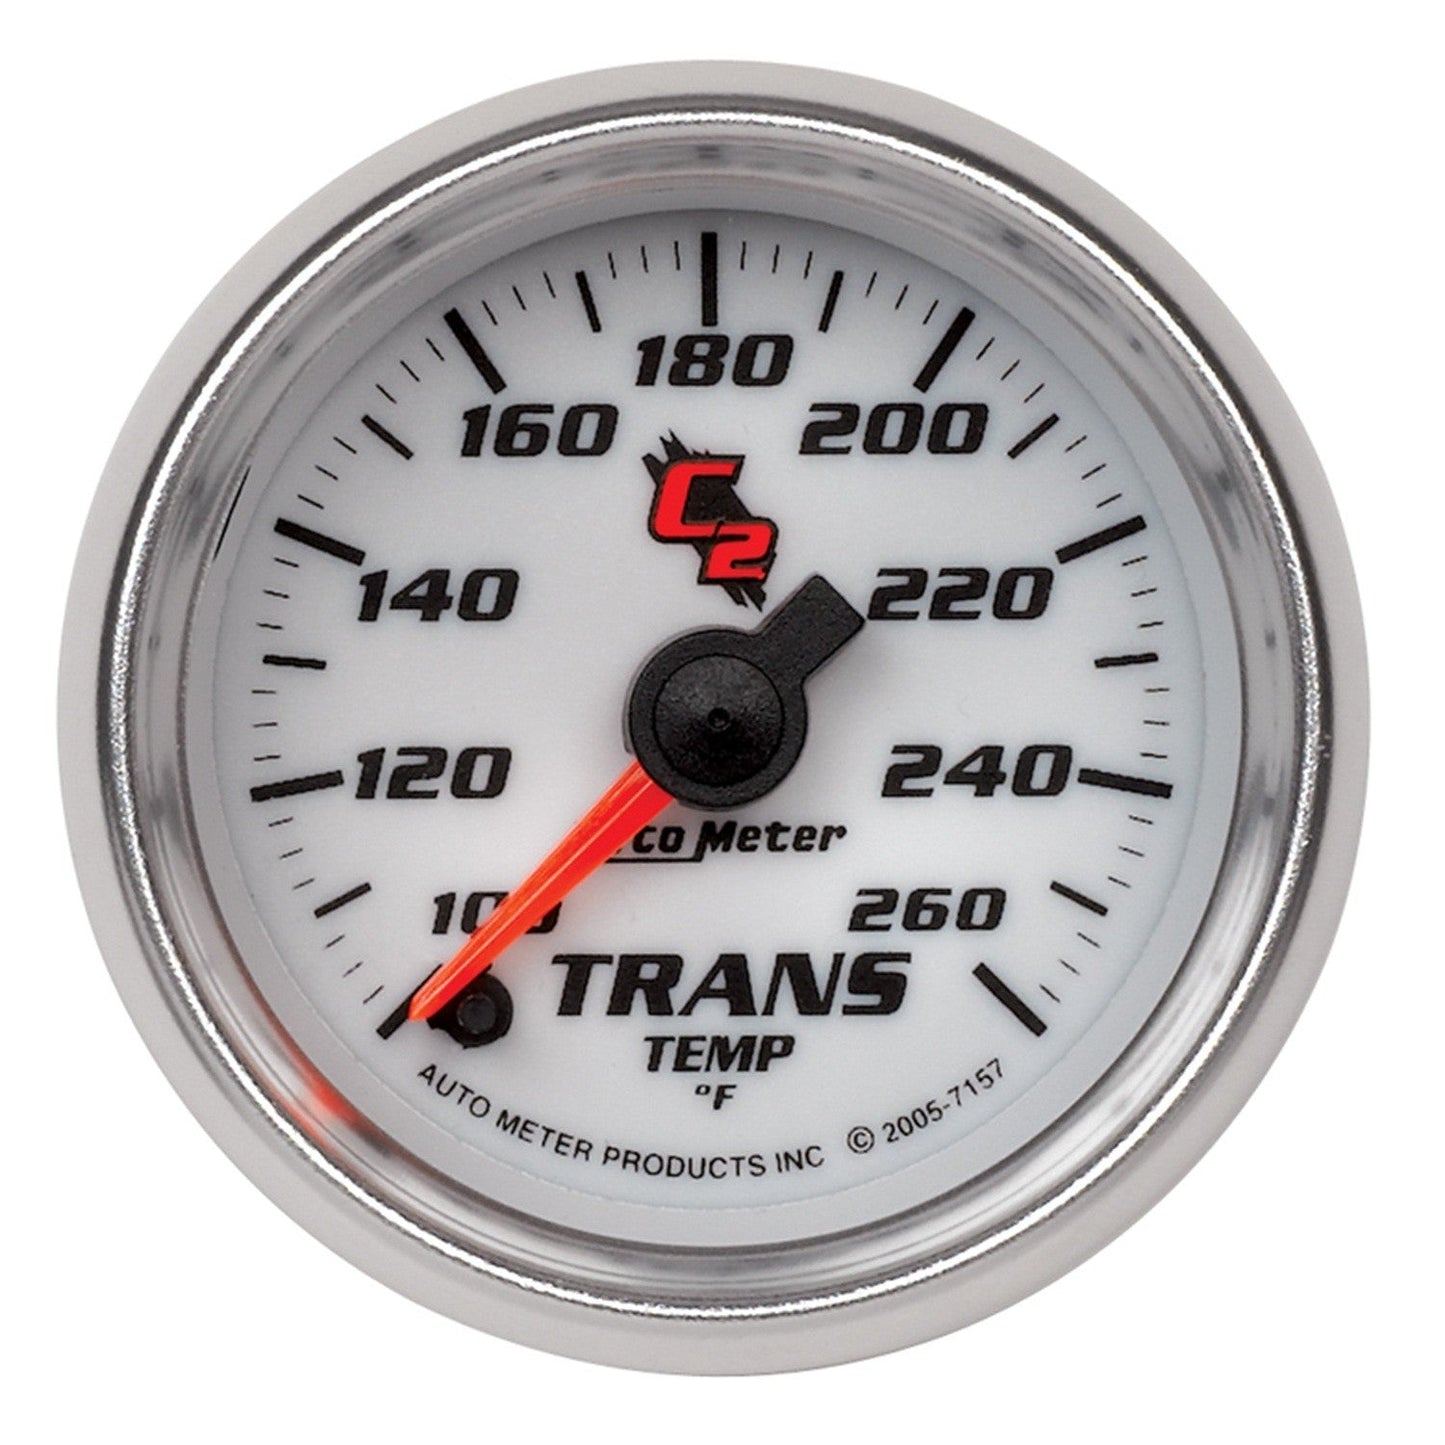 AutoMeter - 2-1/16" TEMPERATURA DE TRANSMISSÃO, 100-260 °F, MOTOR DE PASSO, C2 (7157)